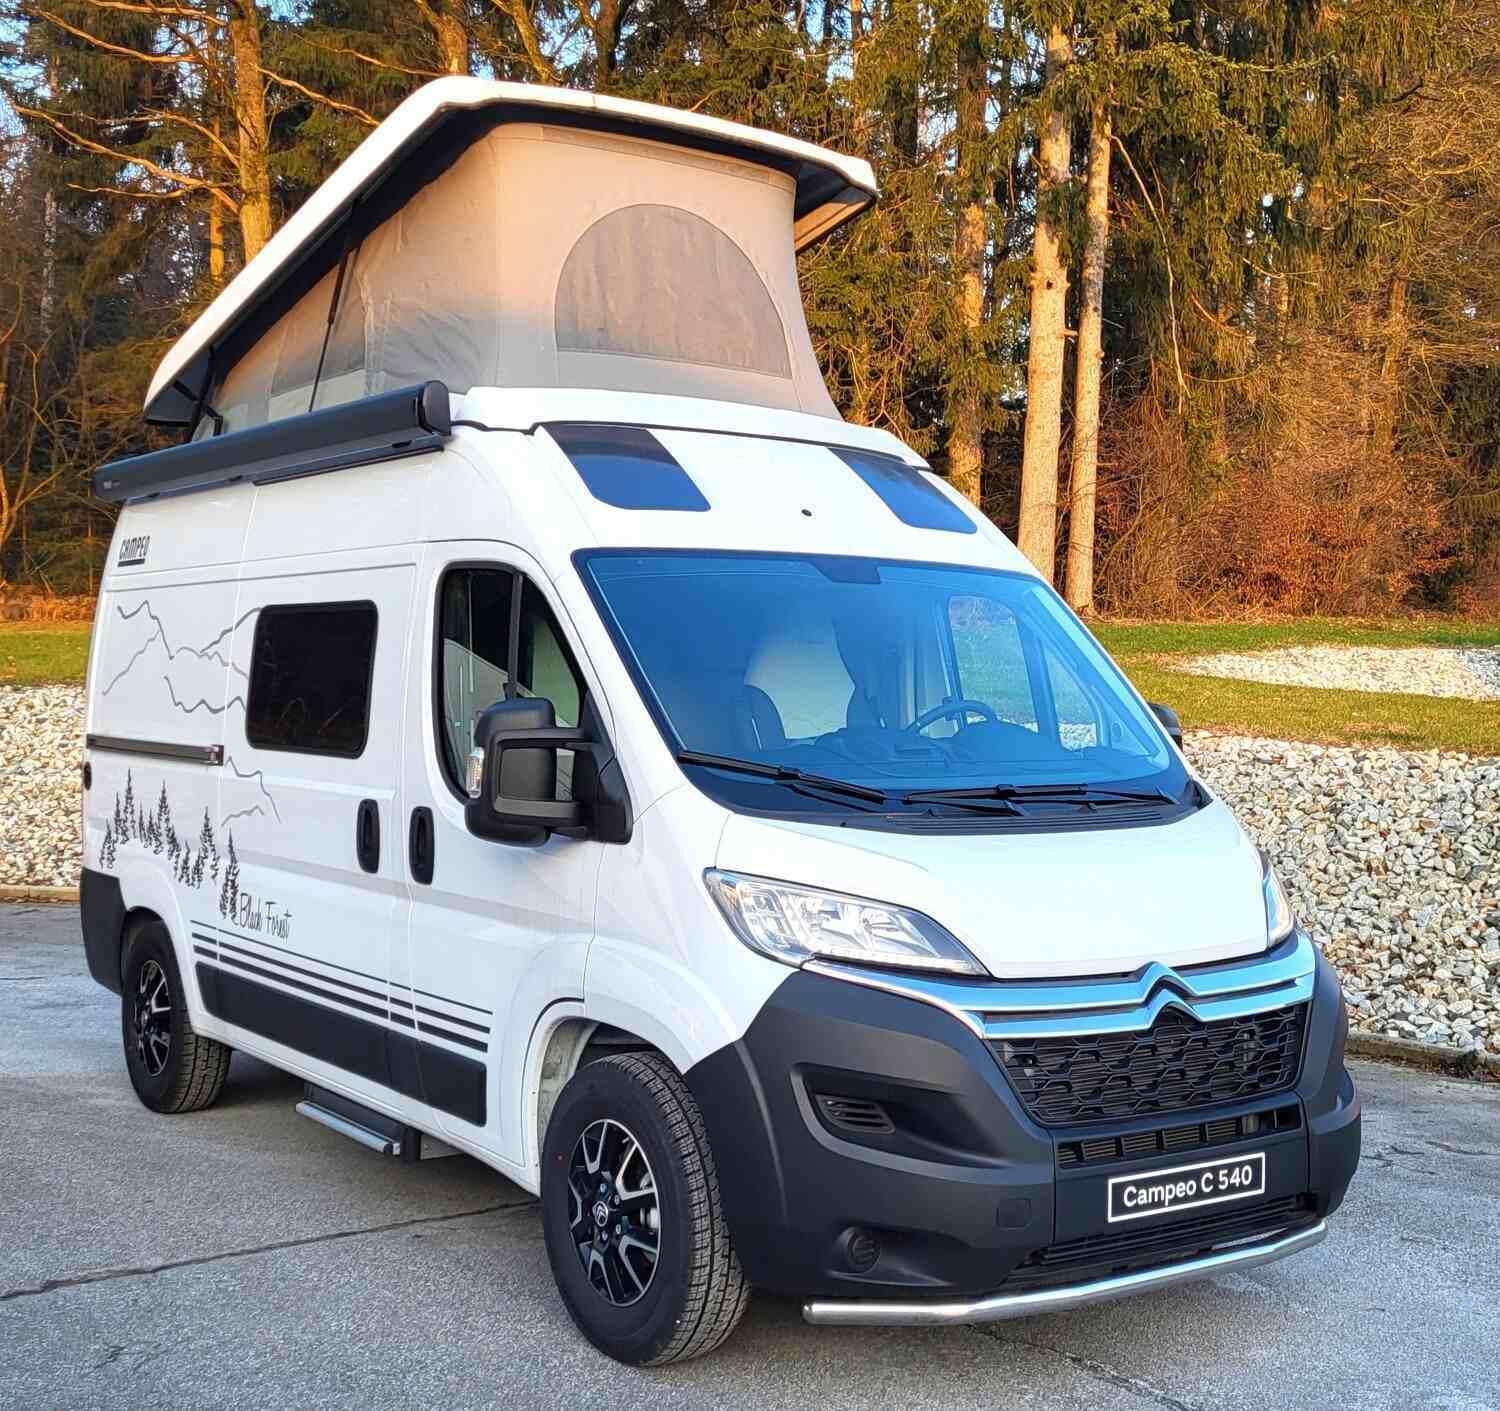 Wohnmobil 🚐 Bürstner Campeo Black Forest C 540 kaufen